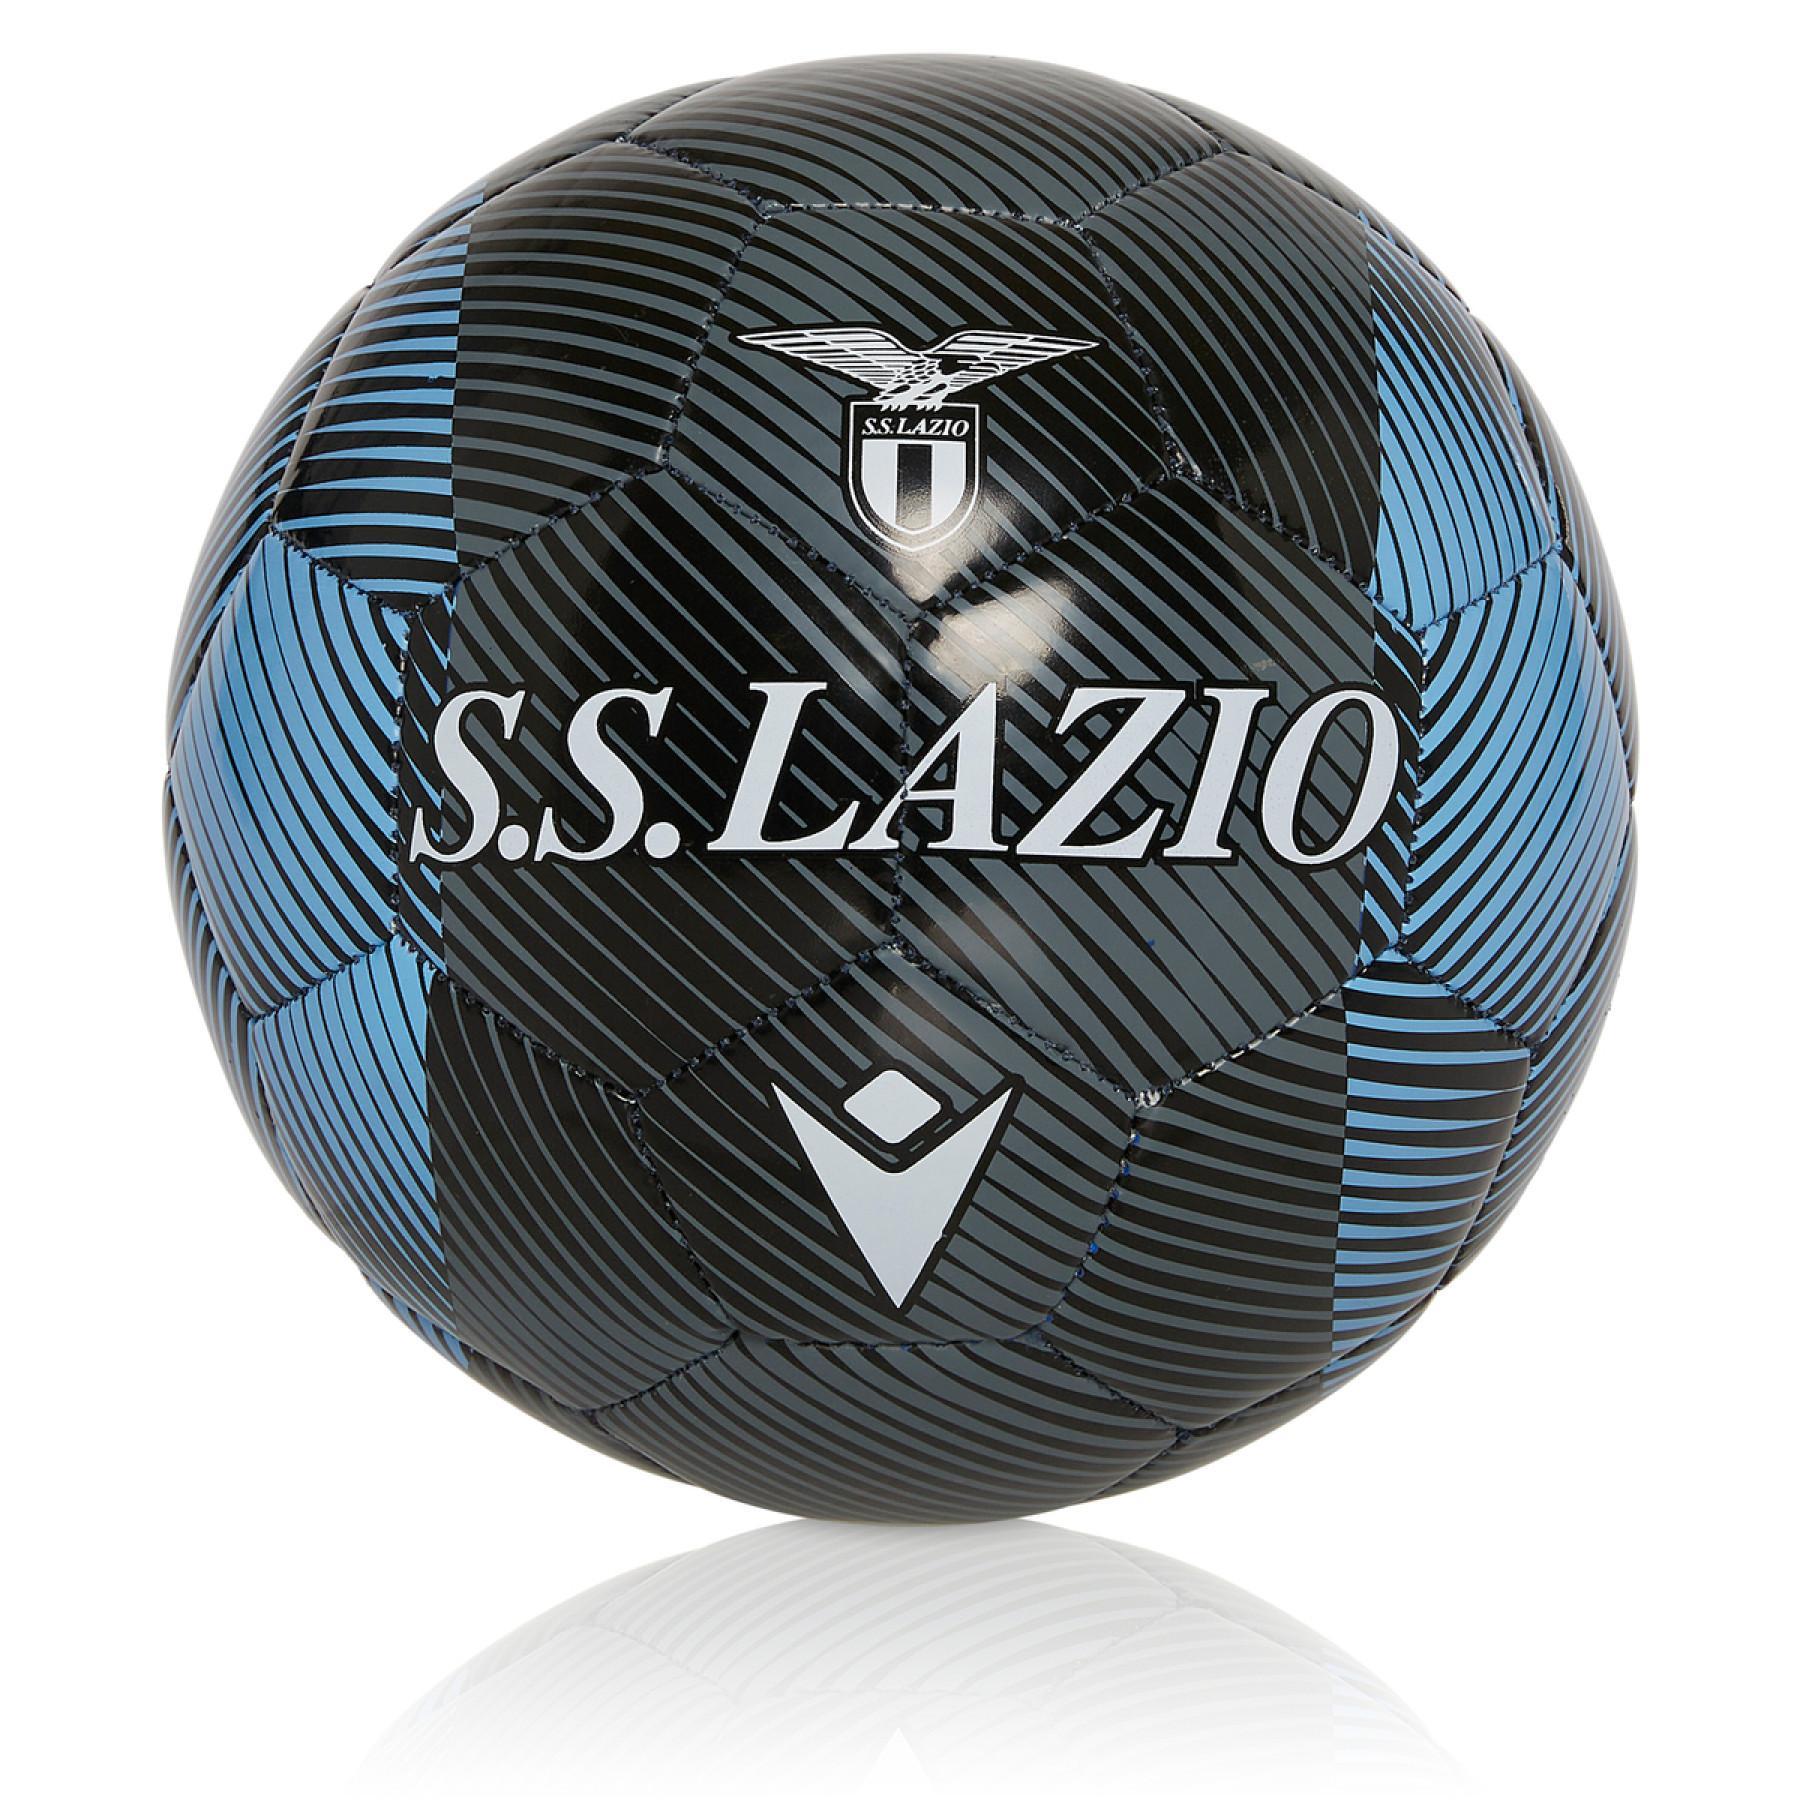 Ballong Lazio Rome 2020/21